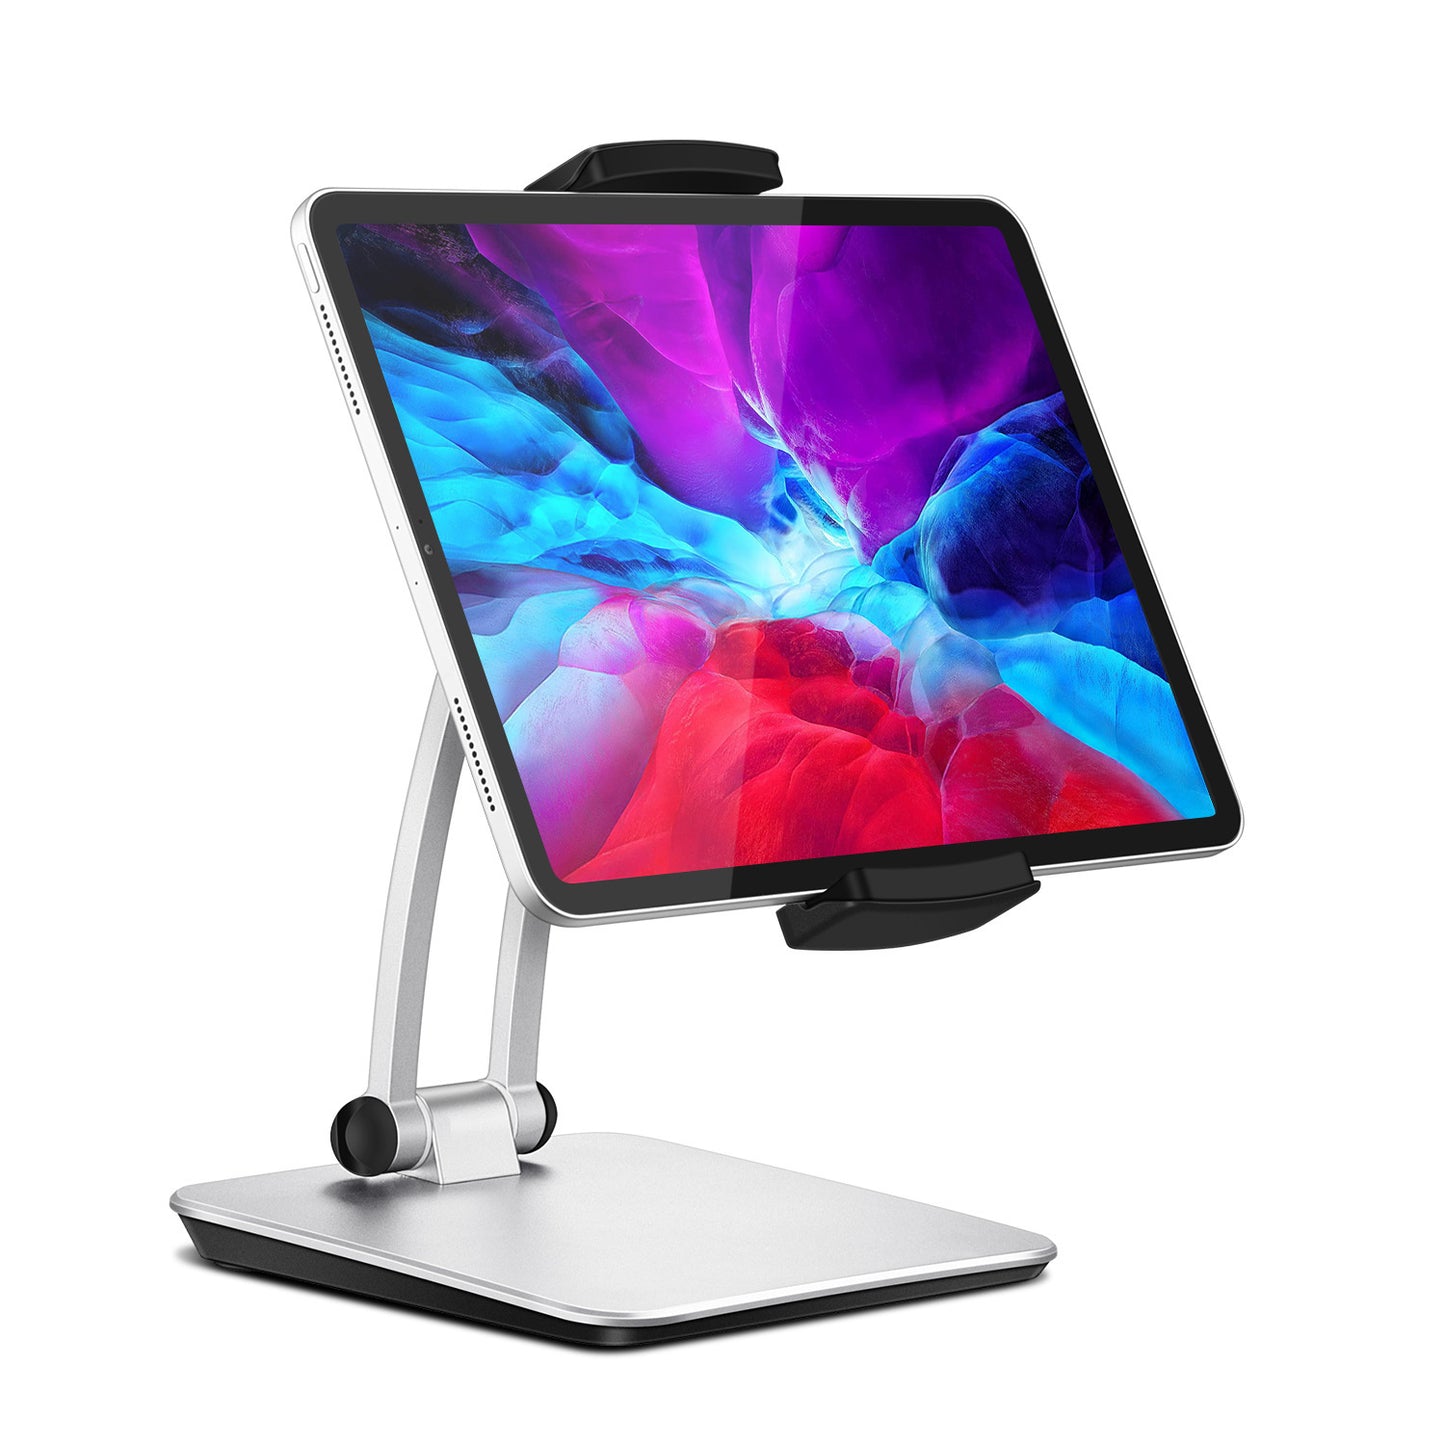 Folding Desktop Tablet Stand For Mobile Phone And Tablet